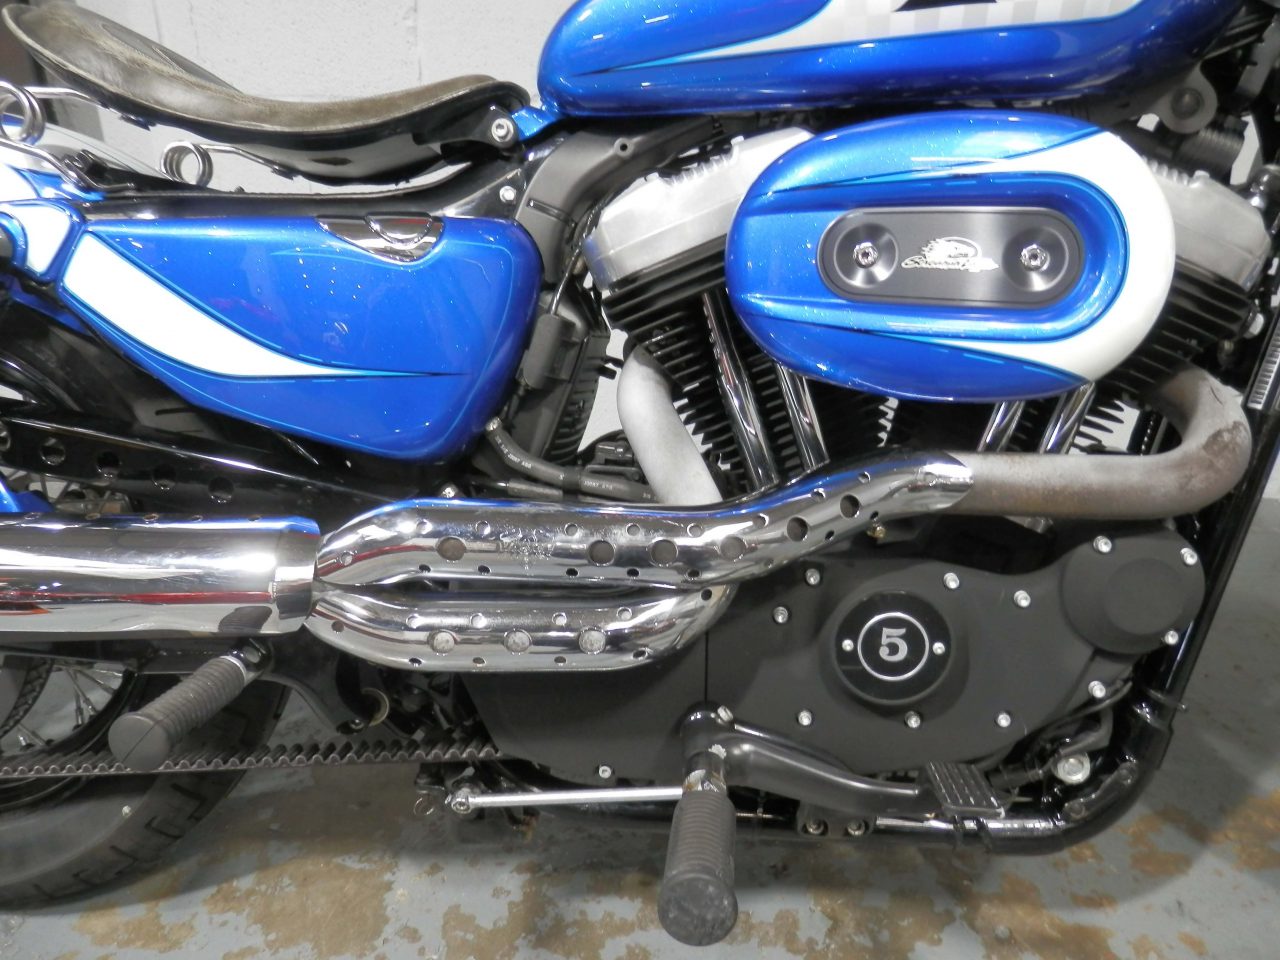 Harley Davidson XL 1200 "Forty-Eight"